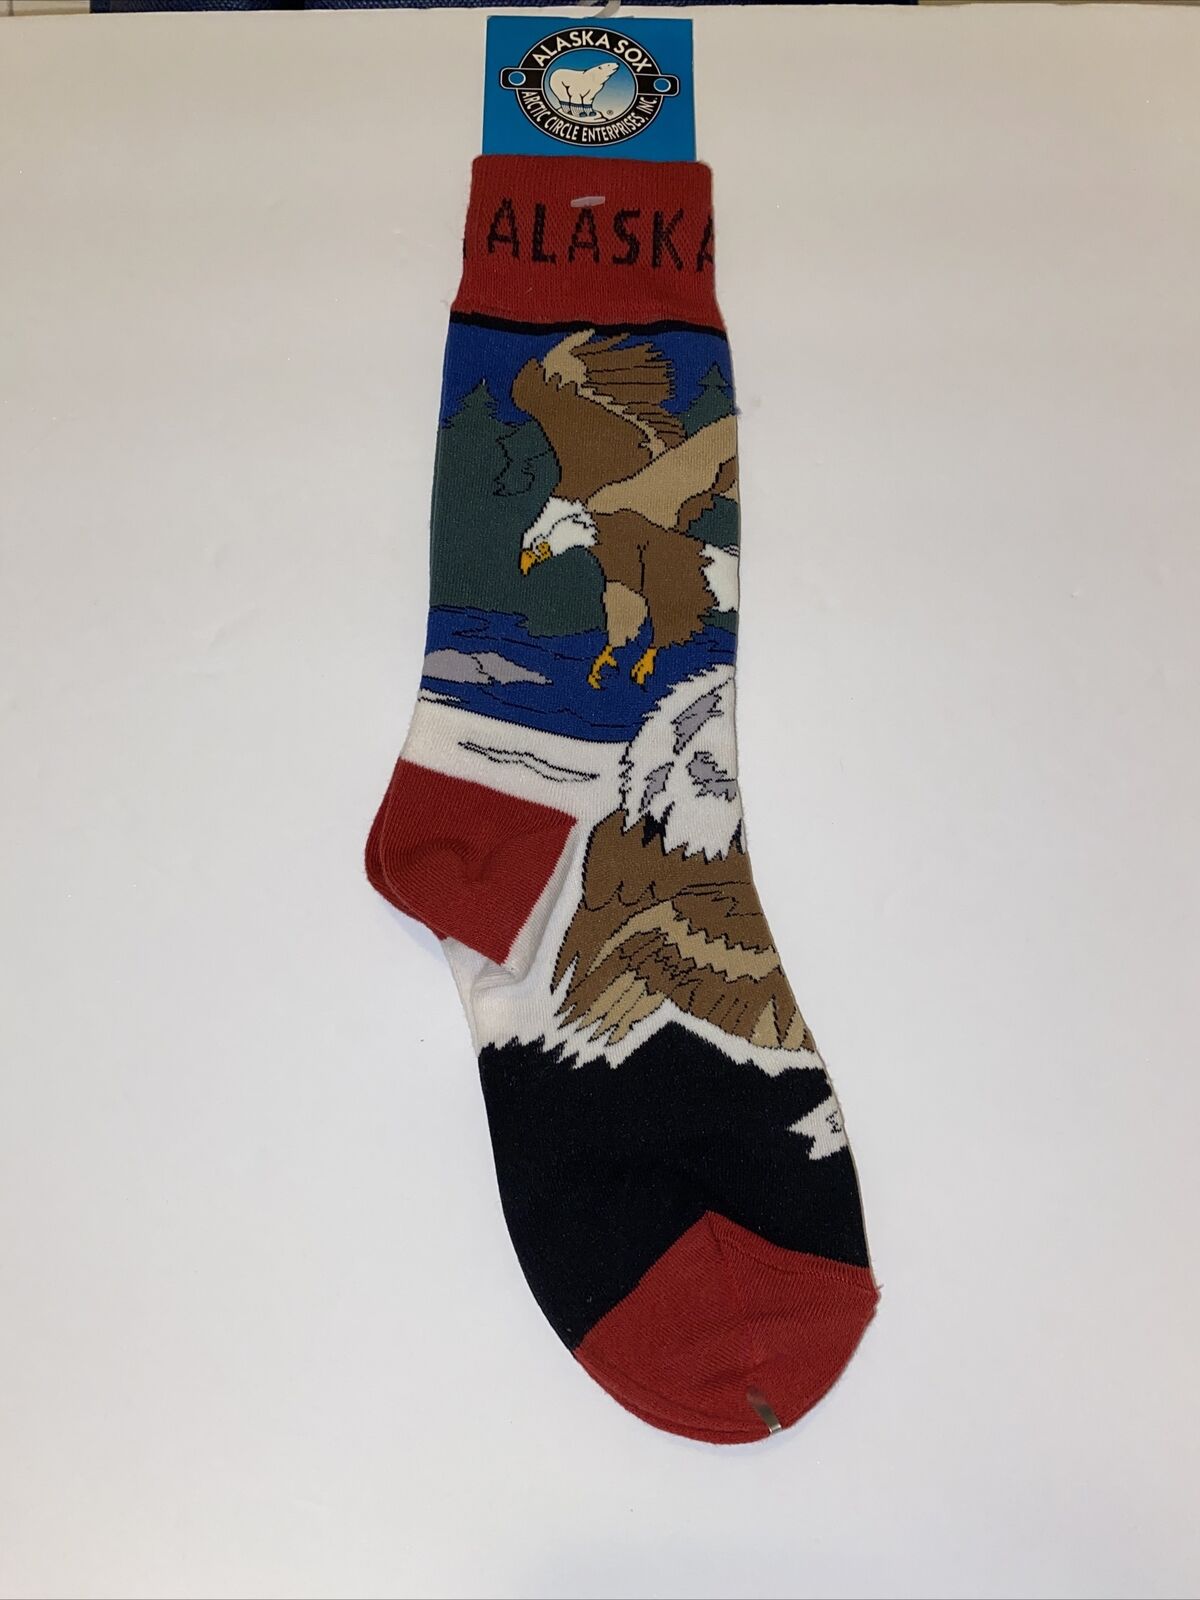 NWT Alaska Sox 8yrs-Adult Arctic Circle Enterprises Warm Socks Eagle Souvenir